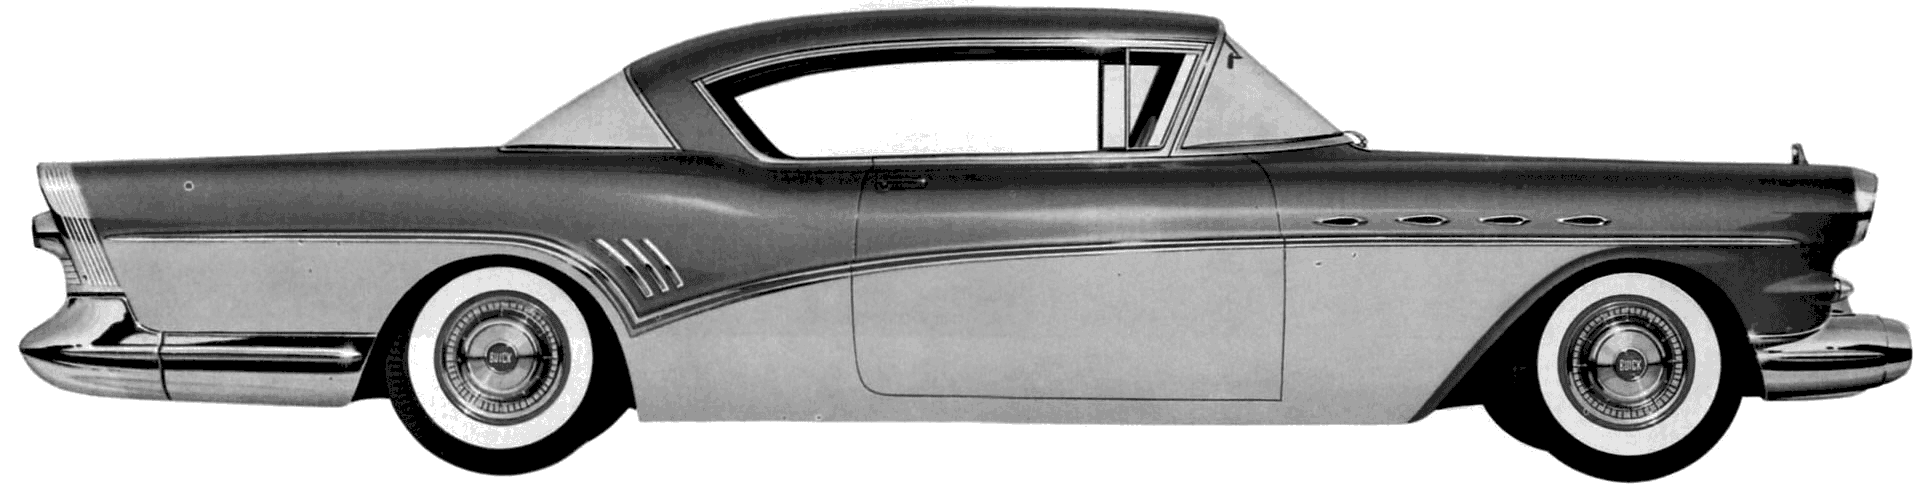 Car Buick Super Riviera Hardtop 1957 